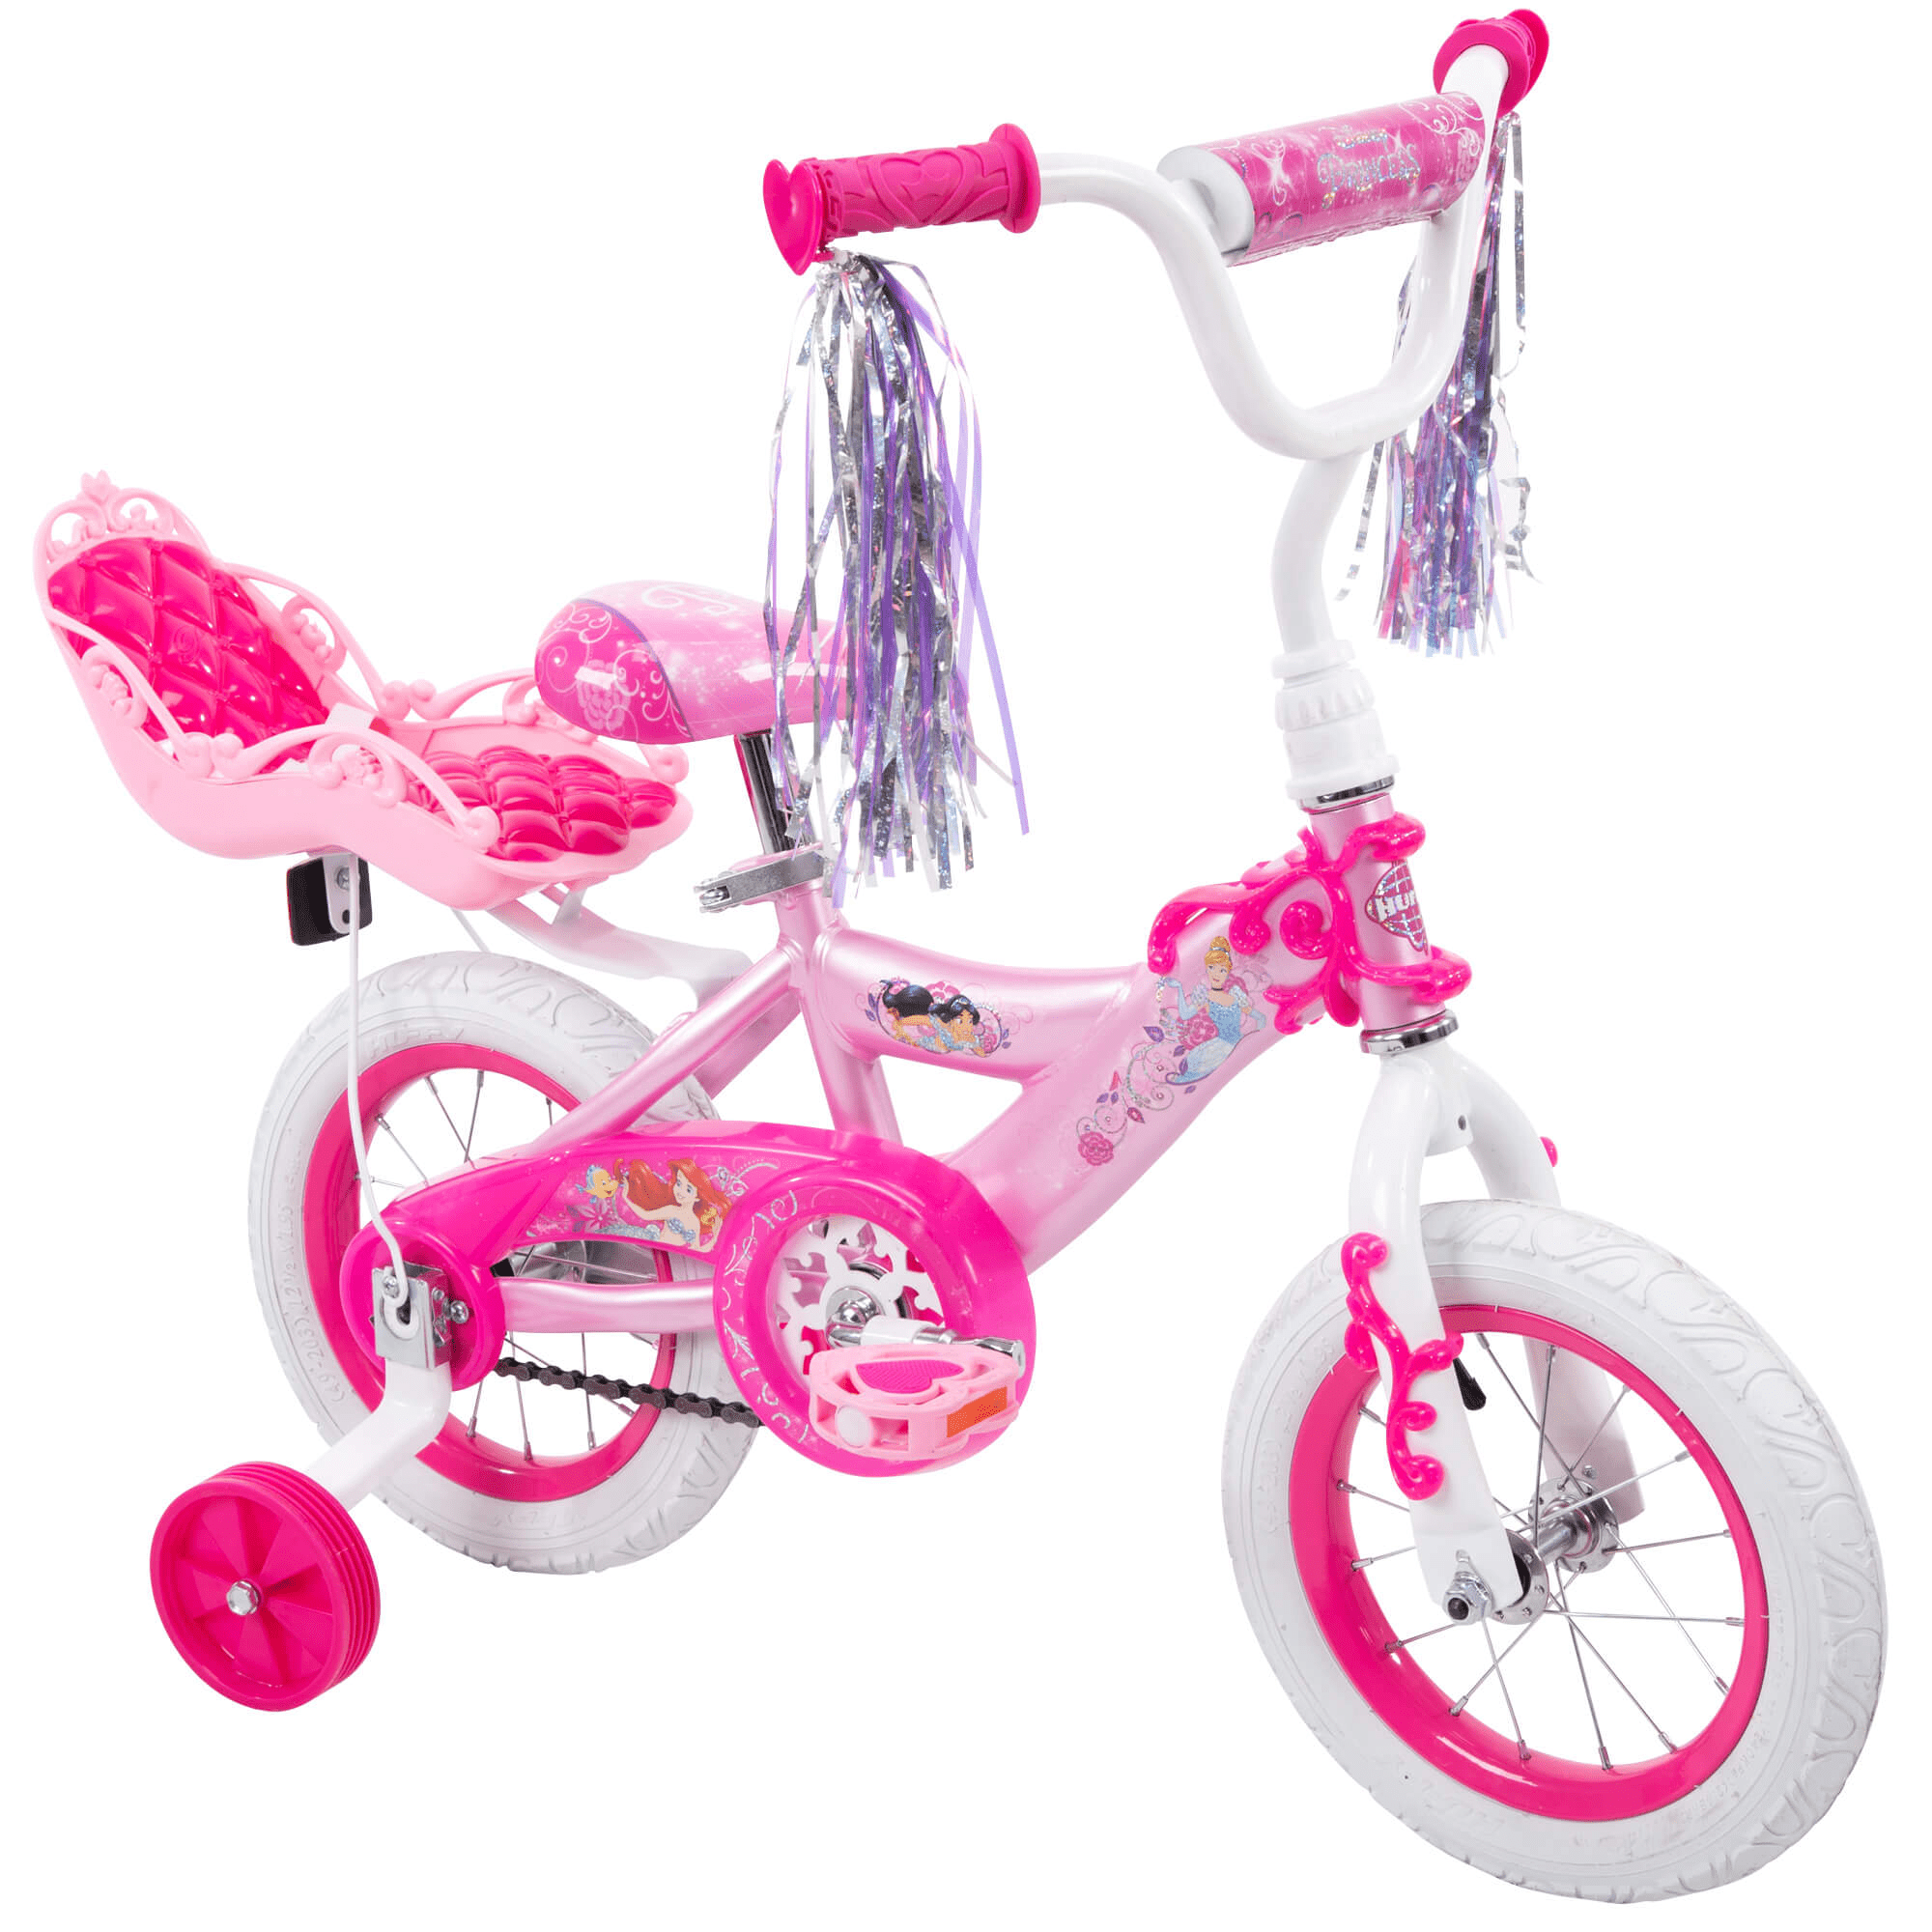 Pink Disney Princess Girls 16-inch Bike by Huffy 